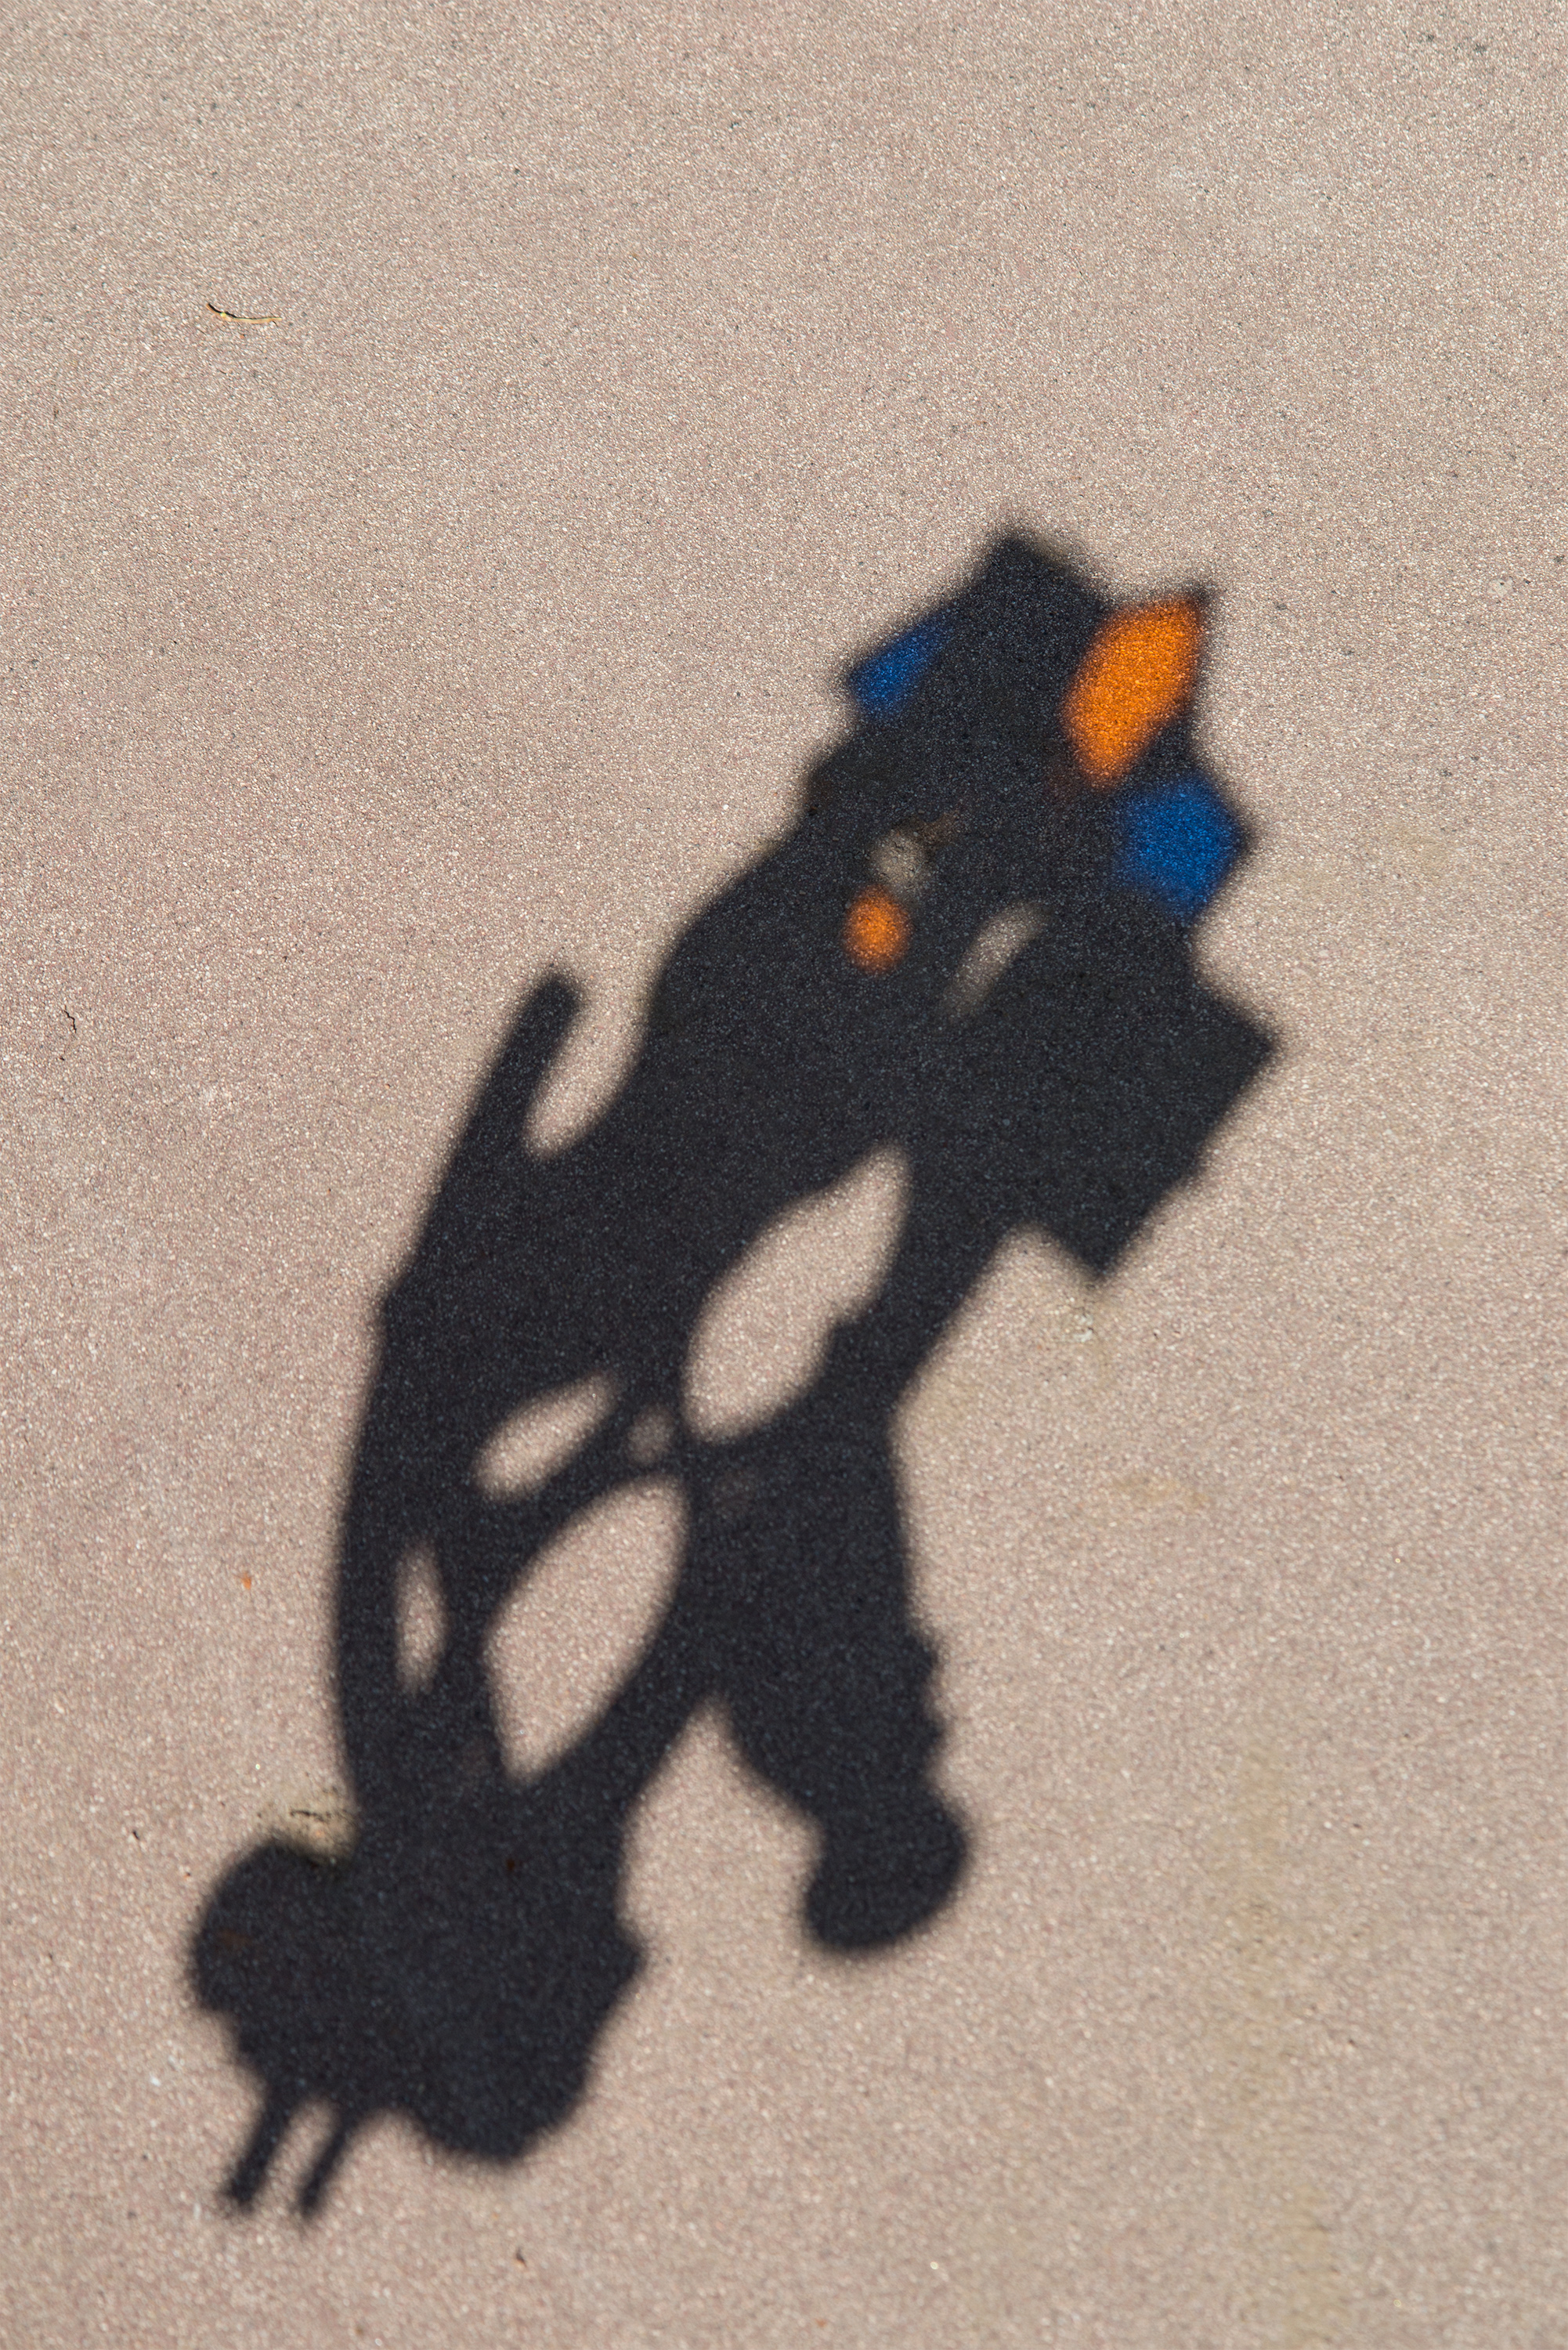 sextant-shadow.jpg